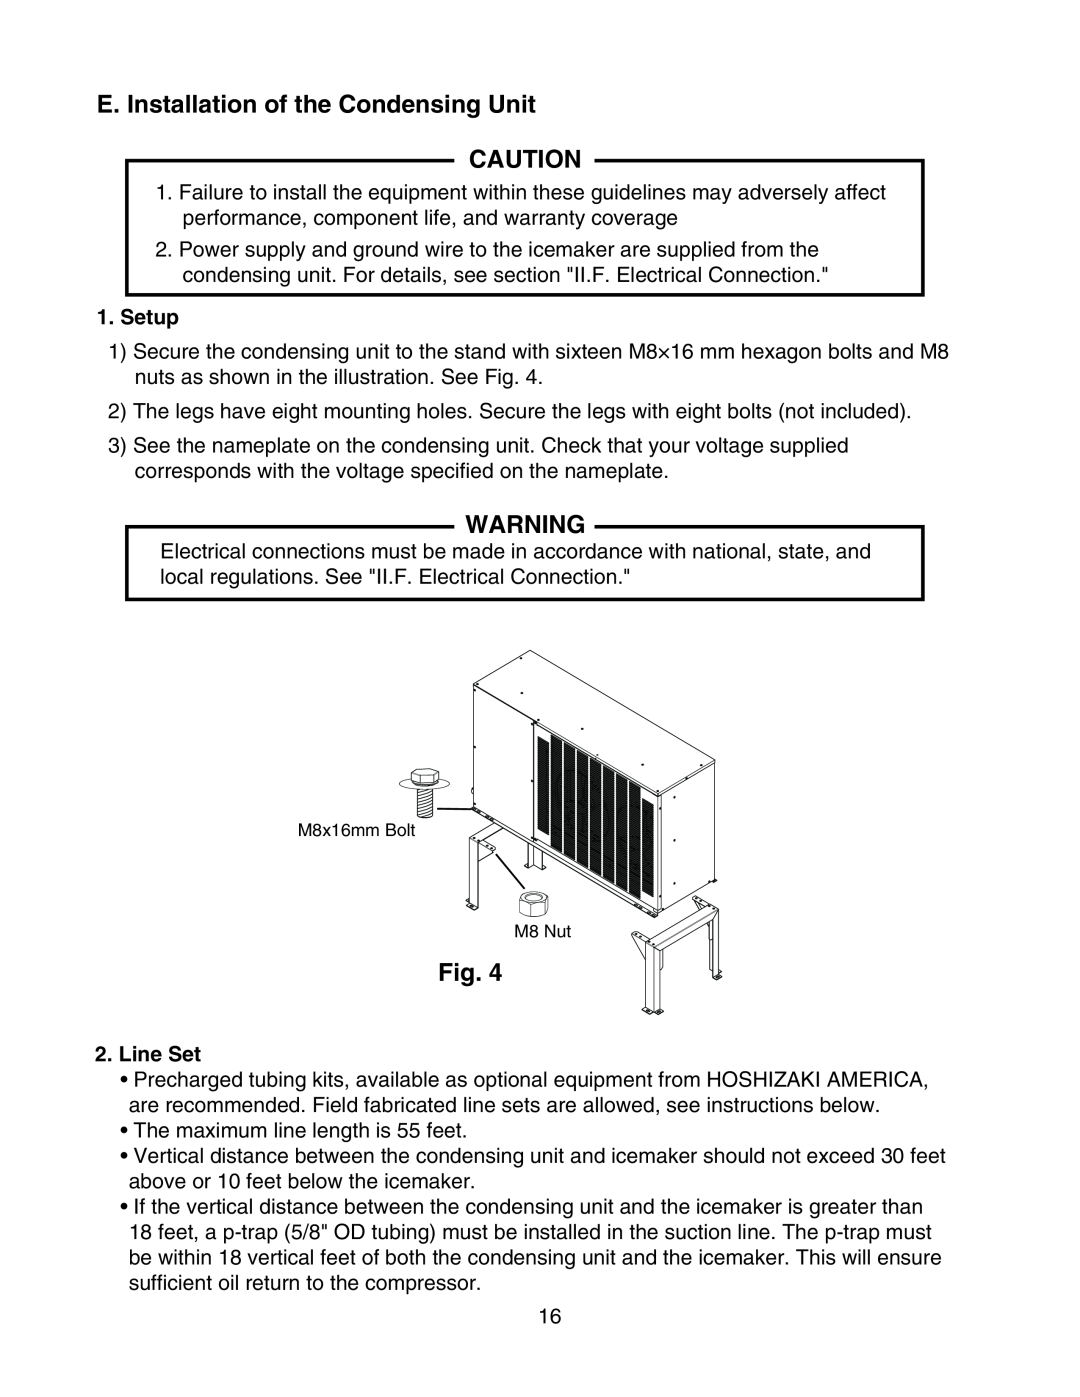 Hoshizaki KMS-1400MLH instruction manual E. Installation of the Condensing Unit, Line Set, Setup 